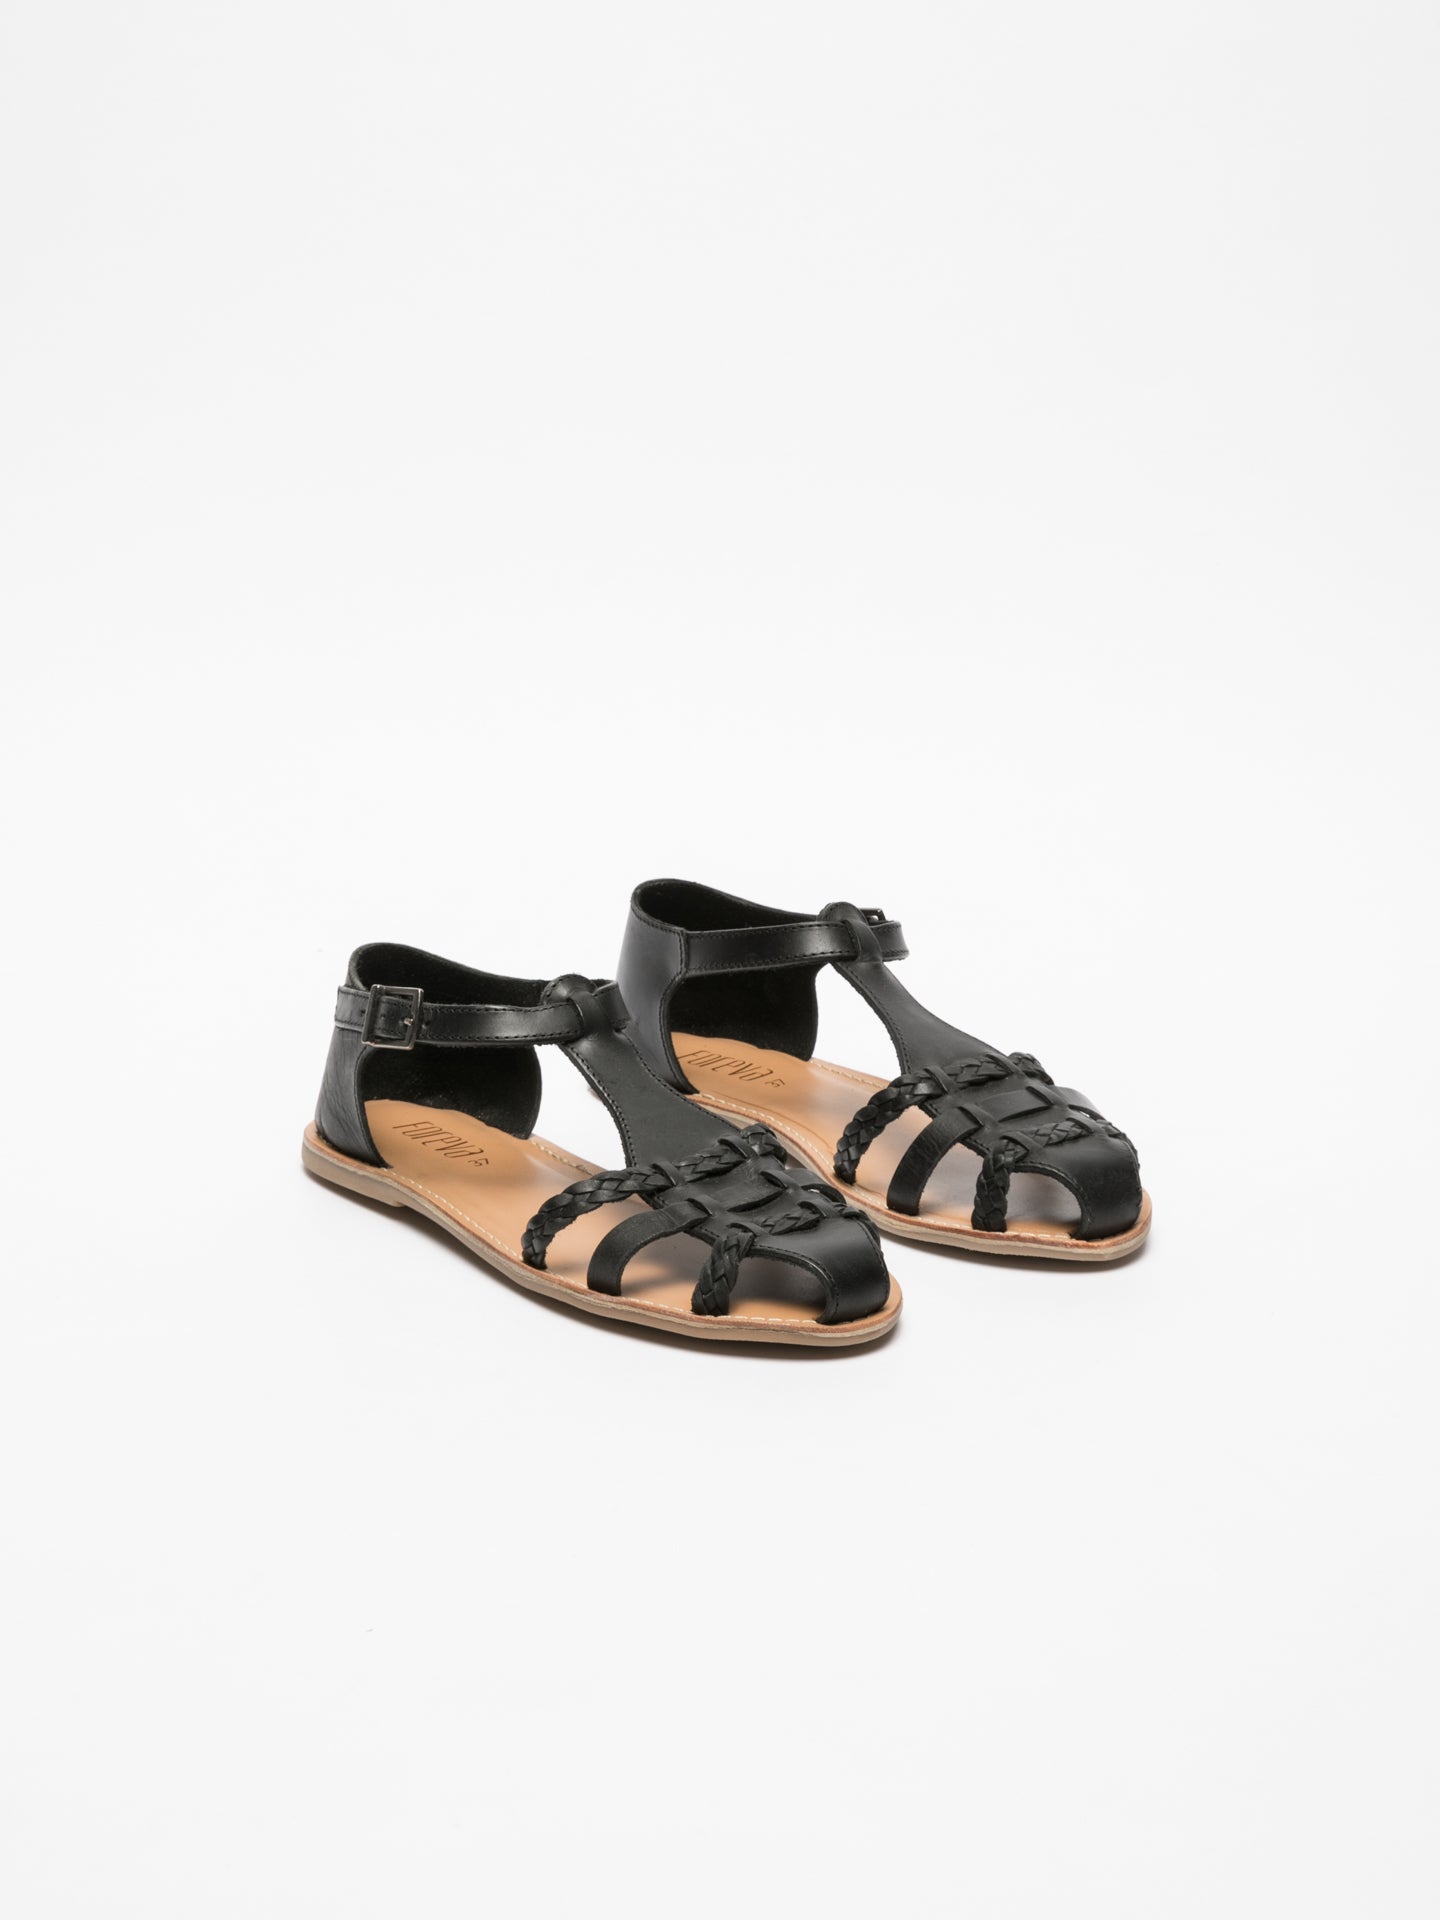 Foreva Black Flat Sandals